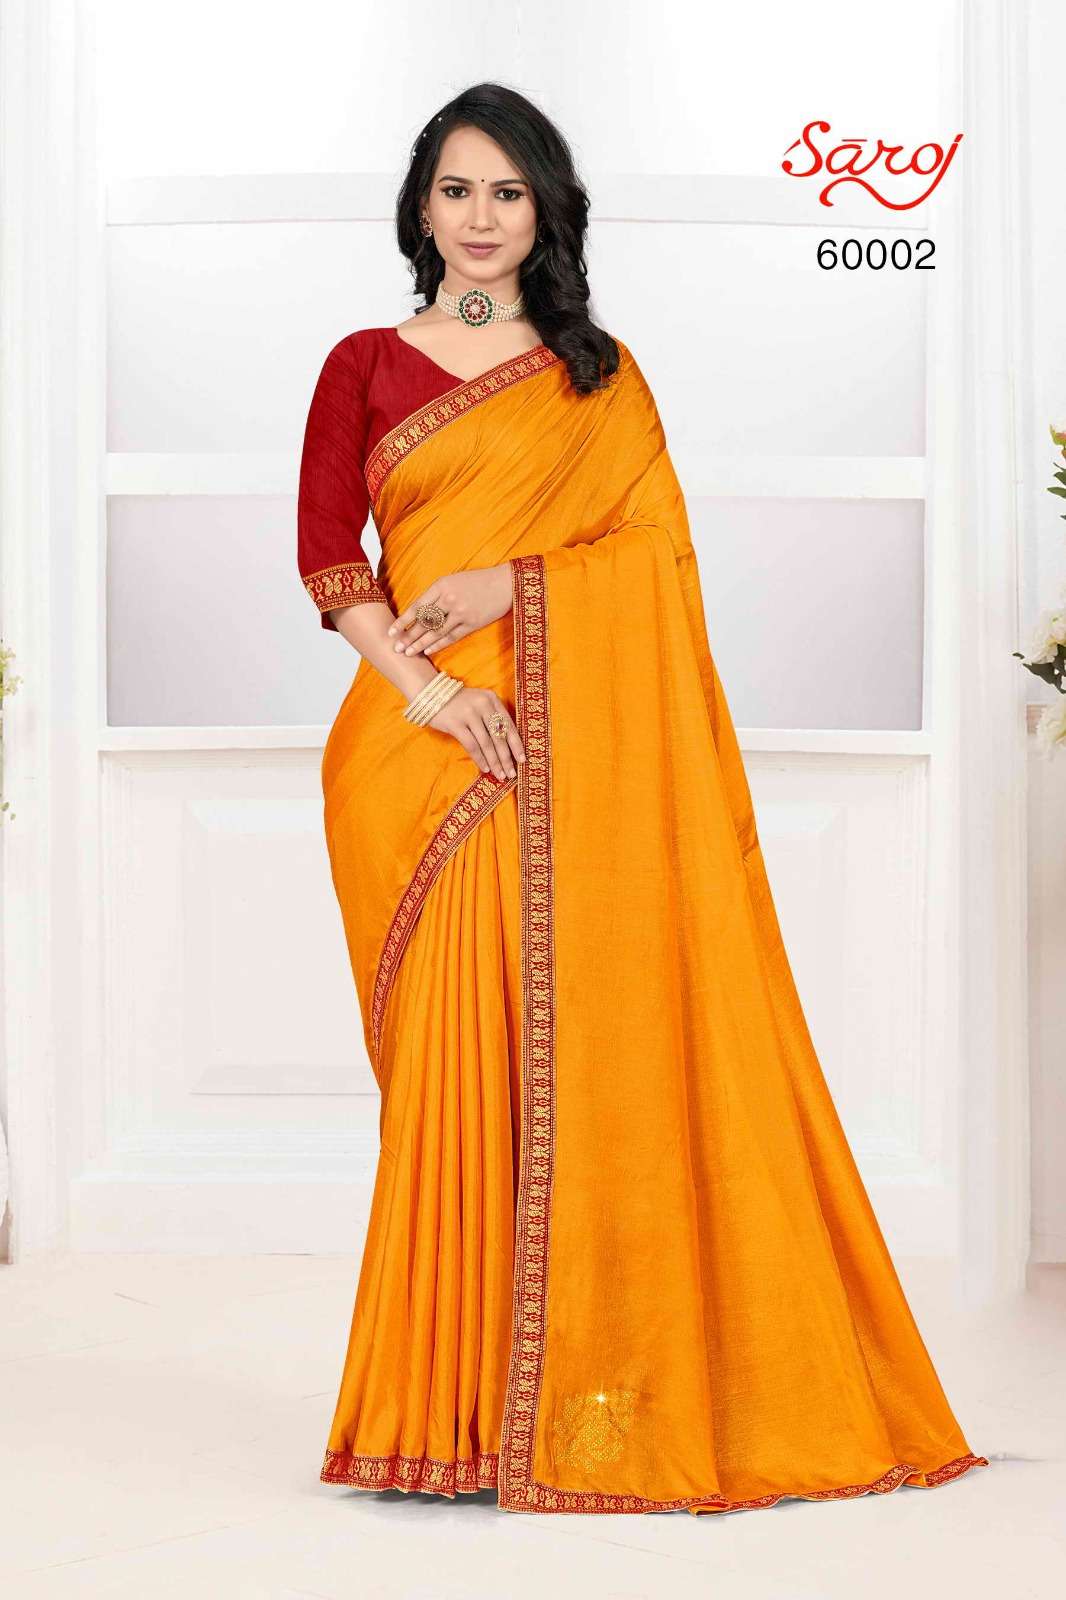 Saroj textile presents Fruit combo-7 Designer casual sarees catalogue